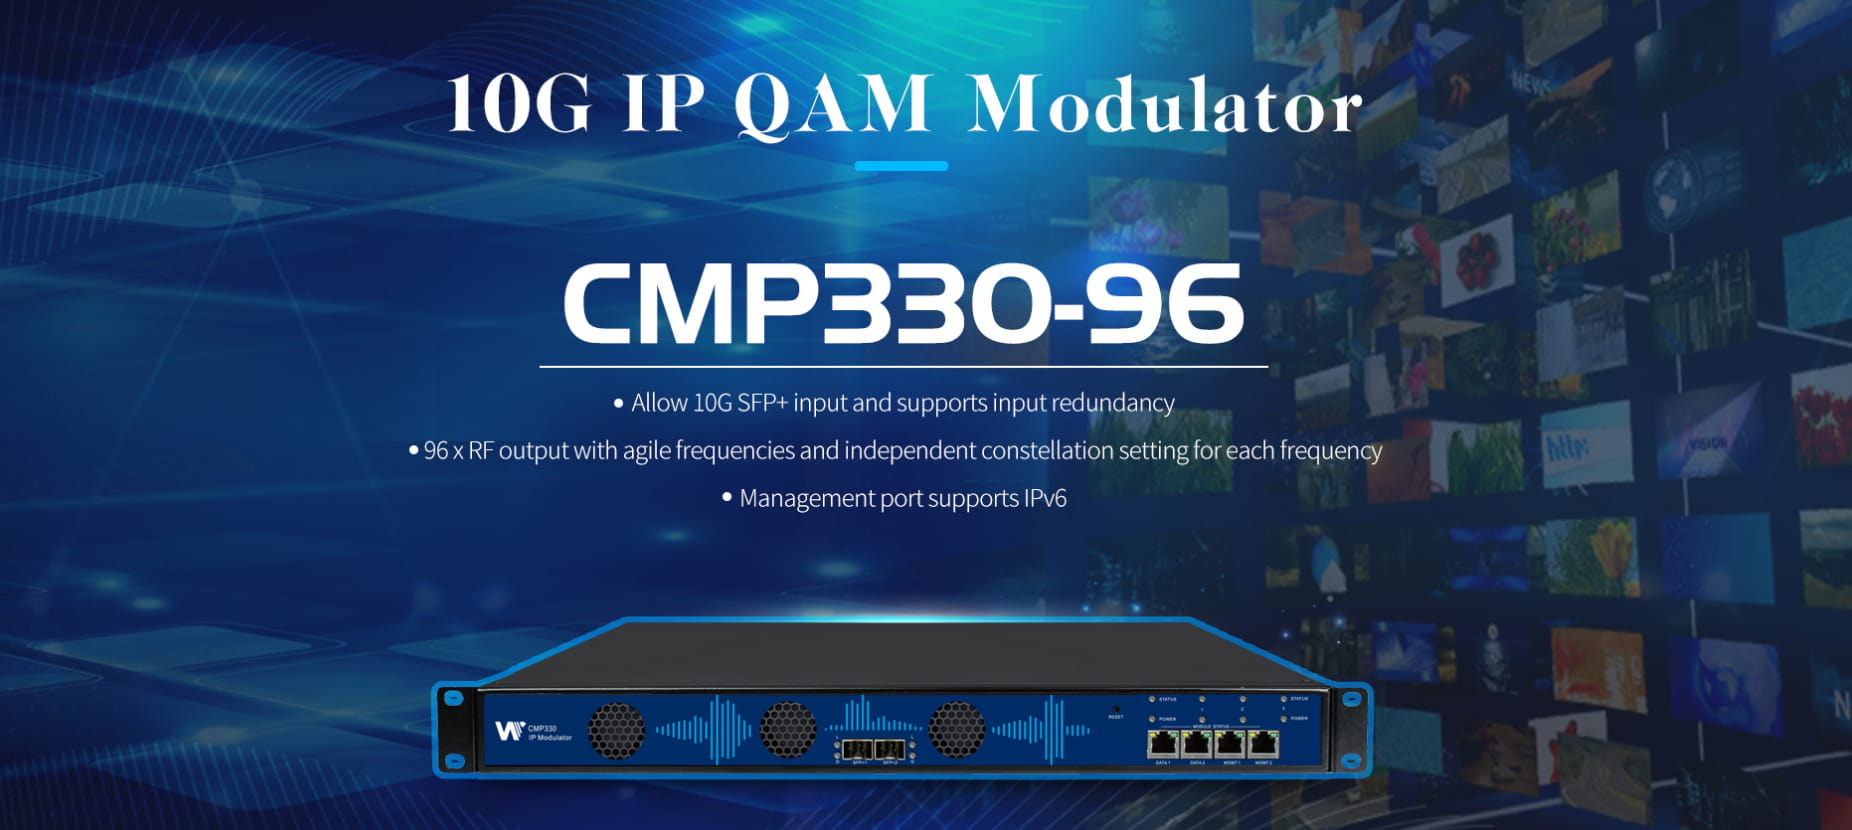 Модулятор QAM 10G Edge